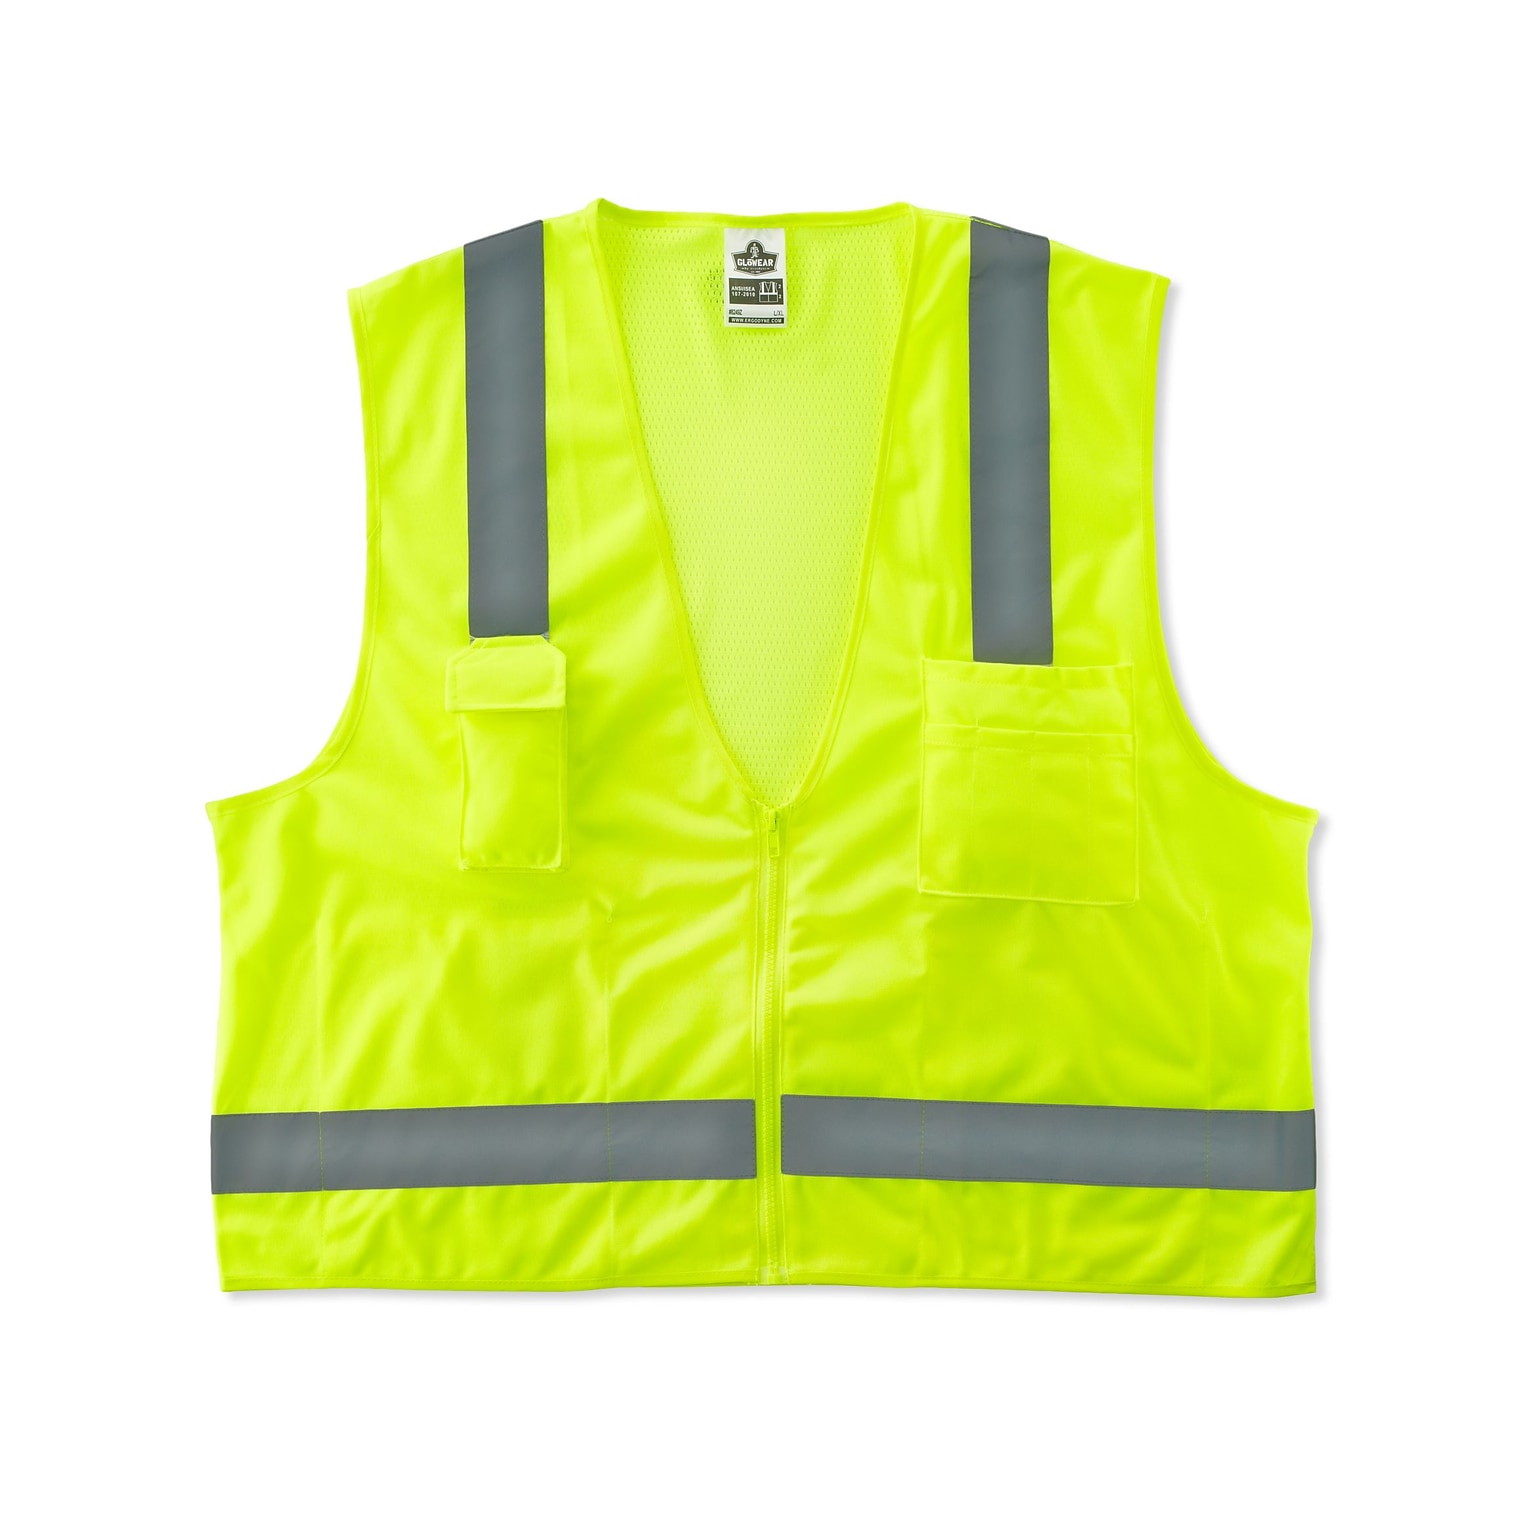 Ergodyne GloWear 8249Z High Visibility Sleeveless Safety Vest, ANSI Class R2, Lime, 2XL/3XL (24027)